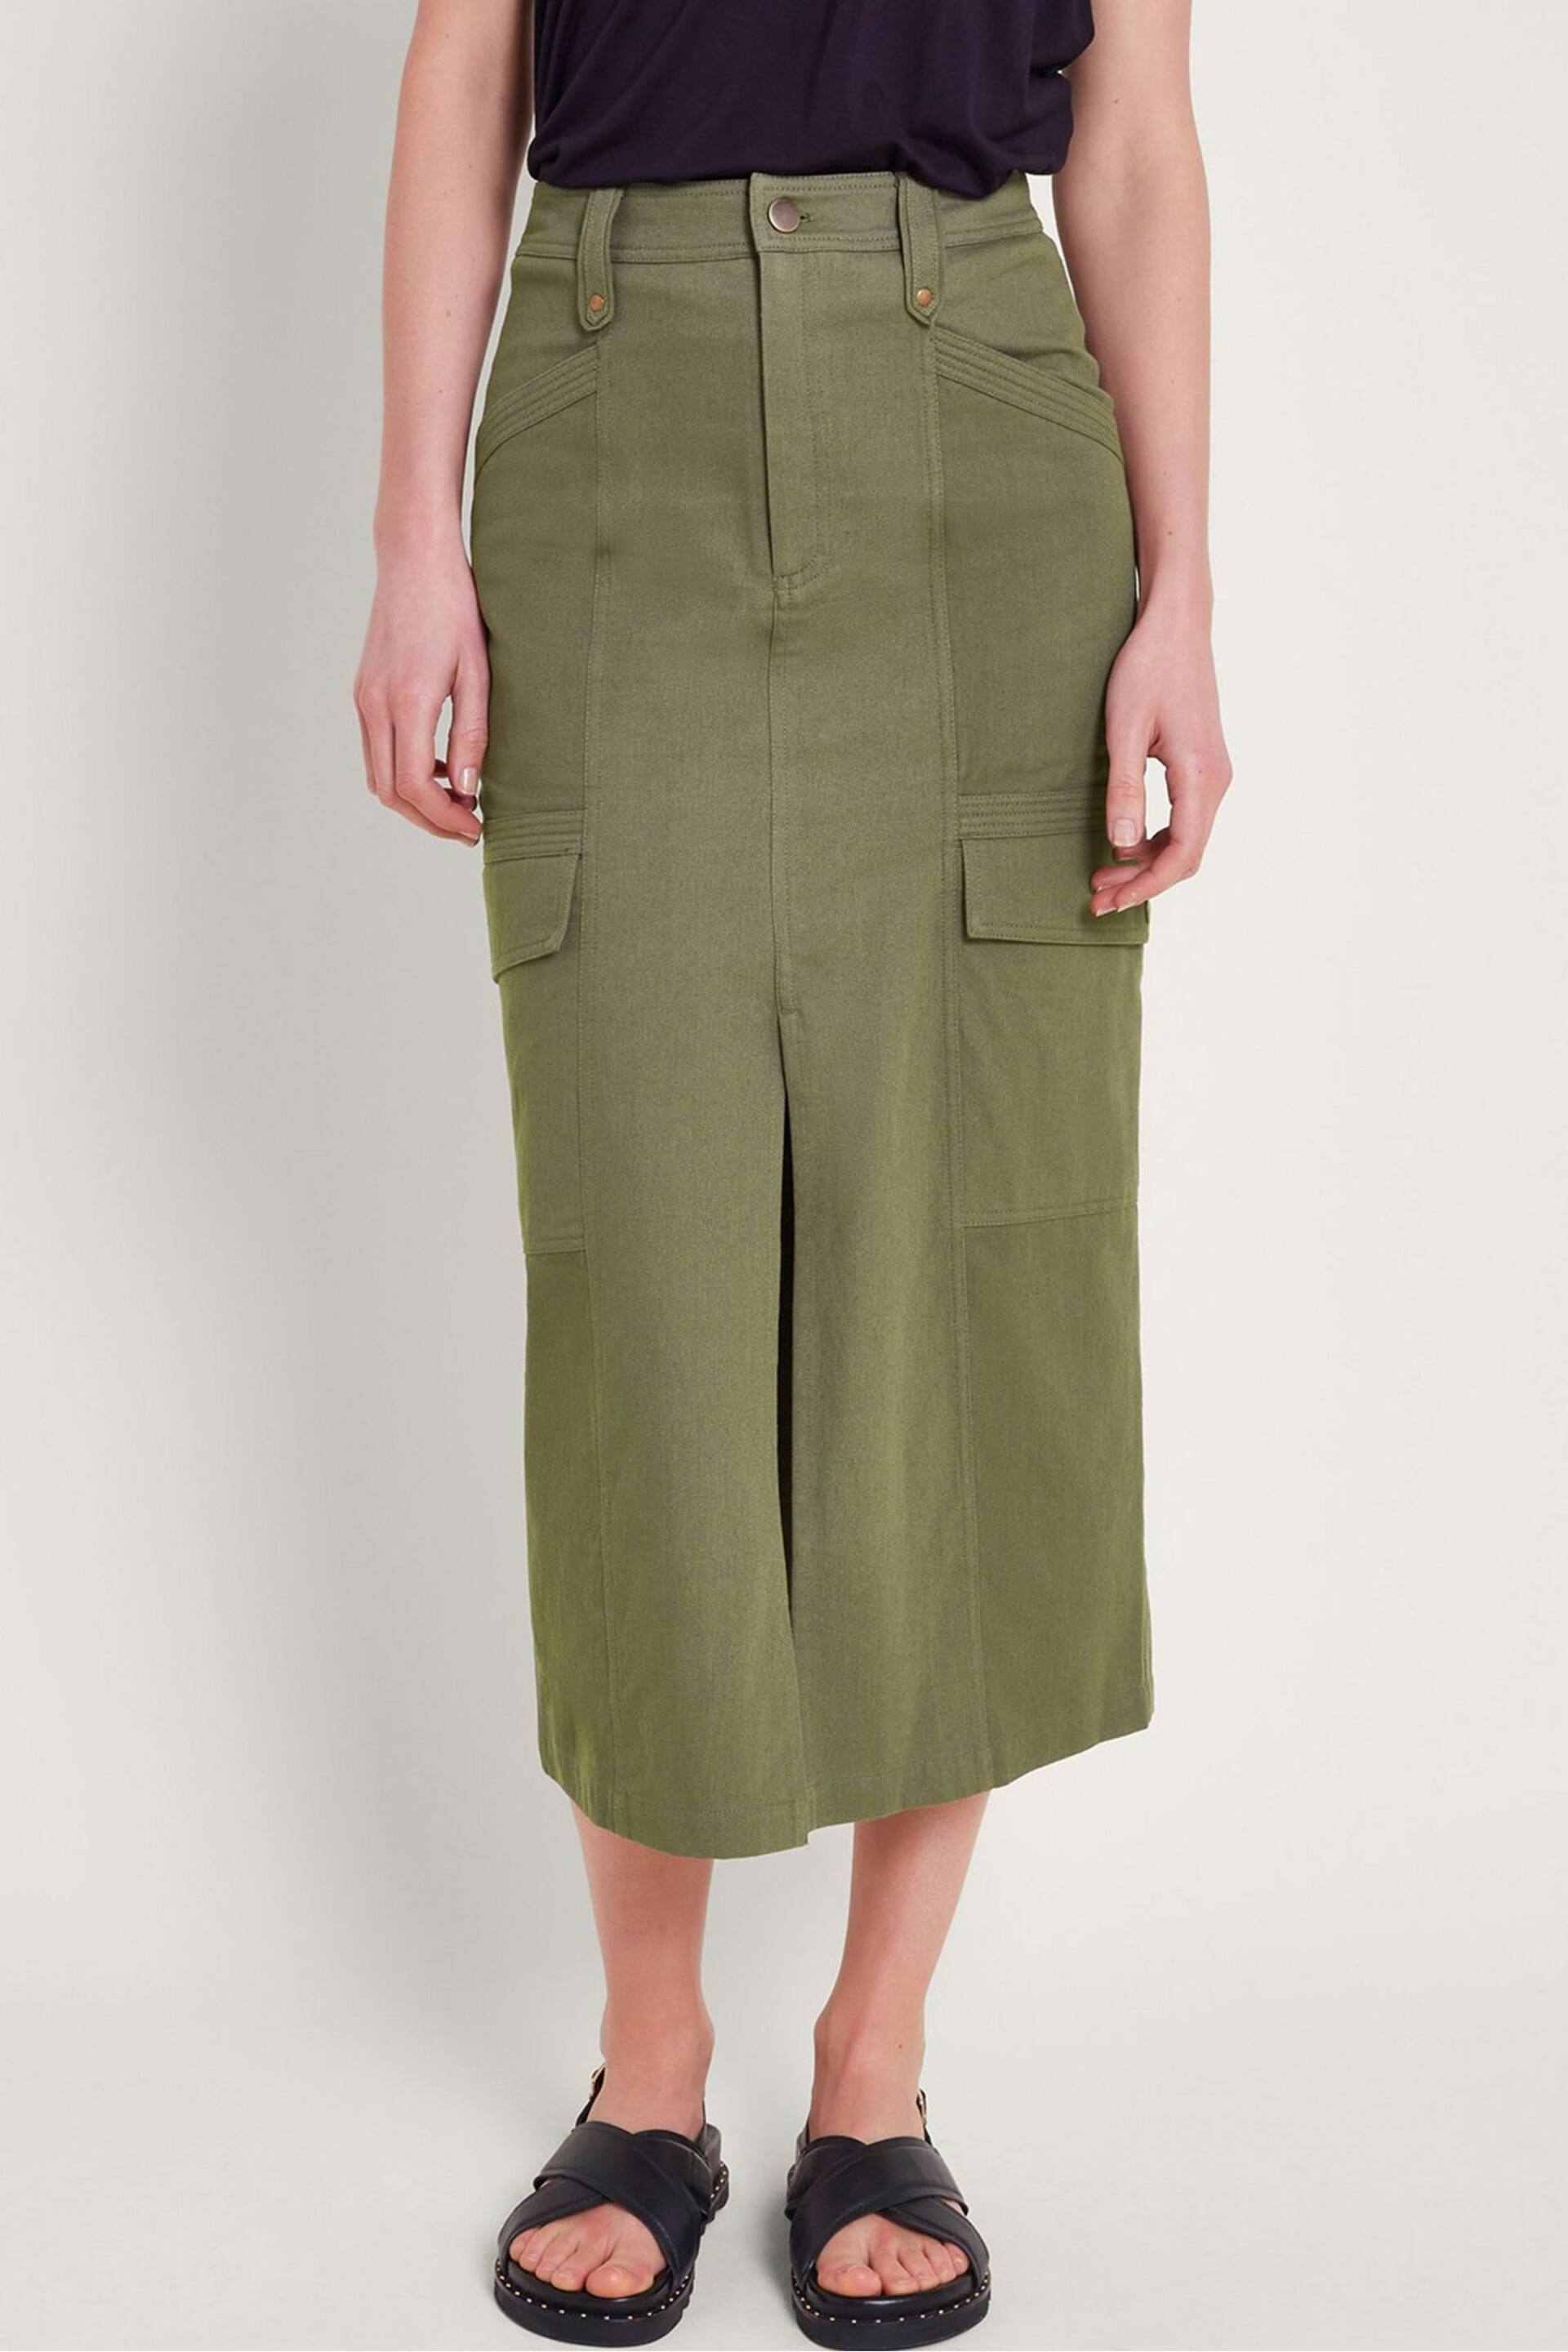 Monsoon Green Lucia Cargo Midi Skirt - Image 1 of 5